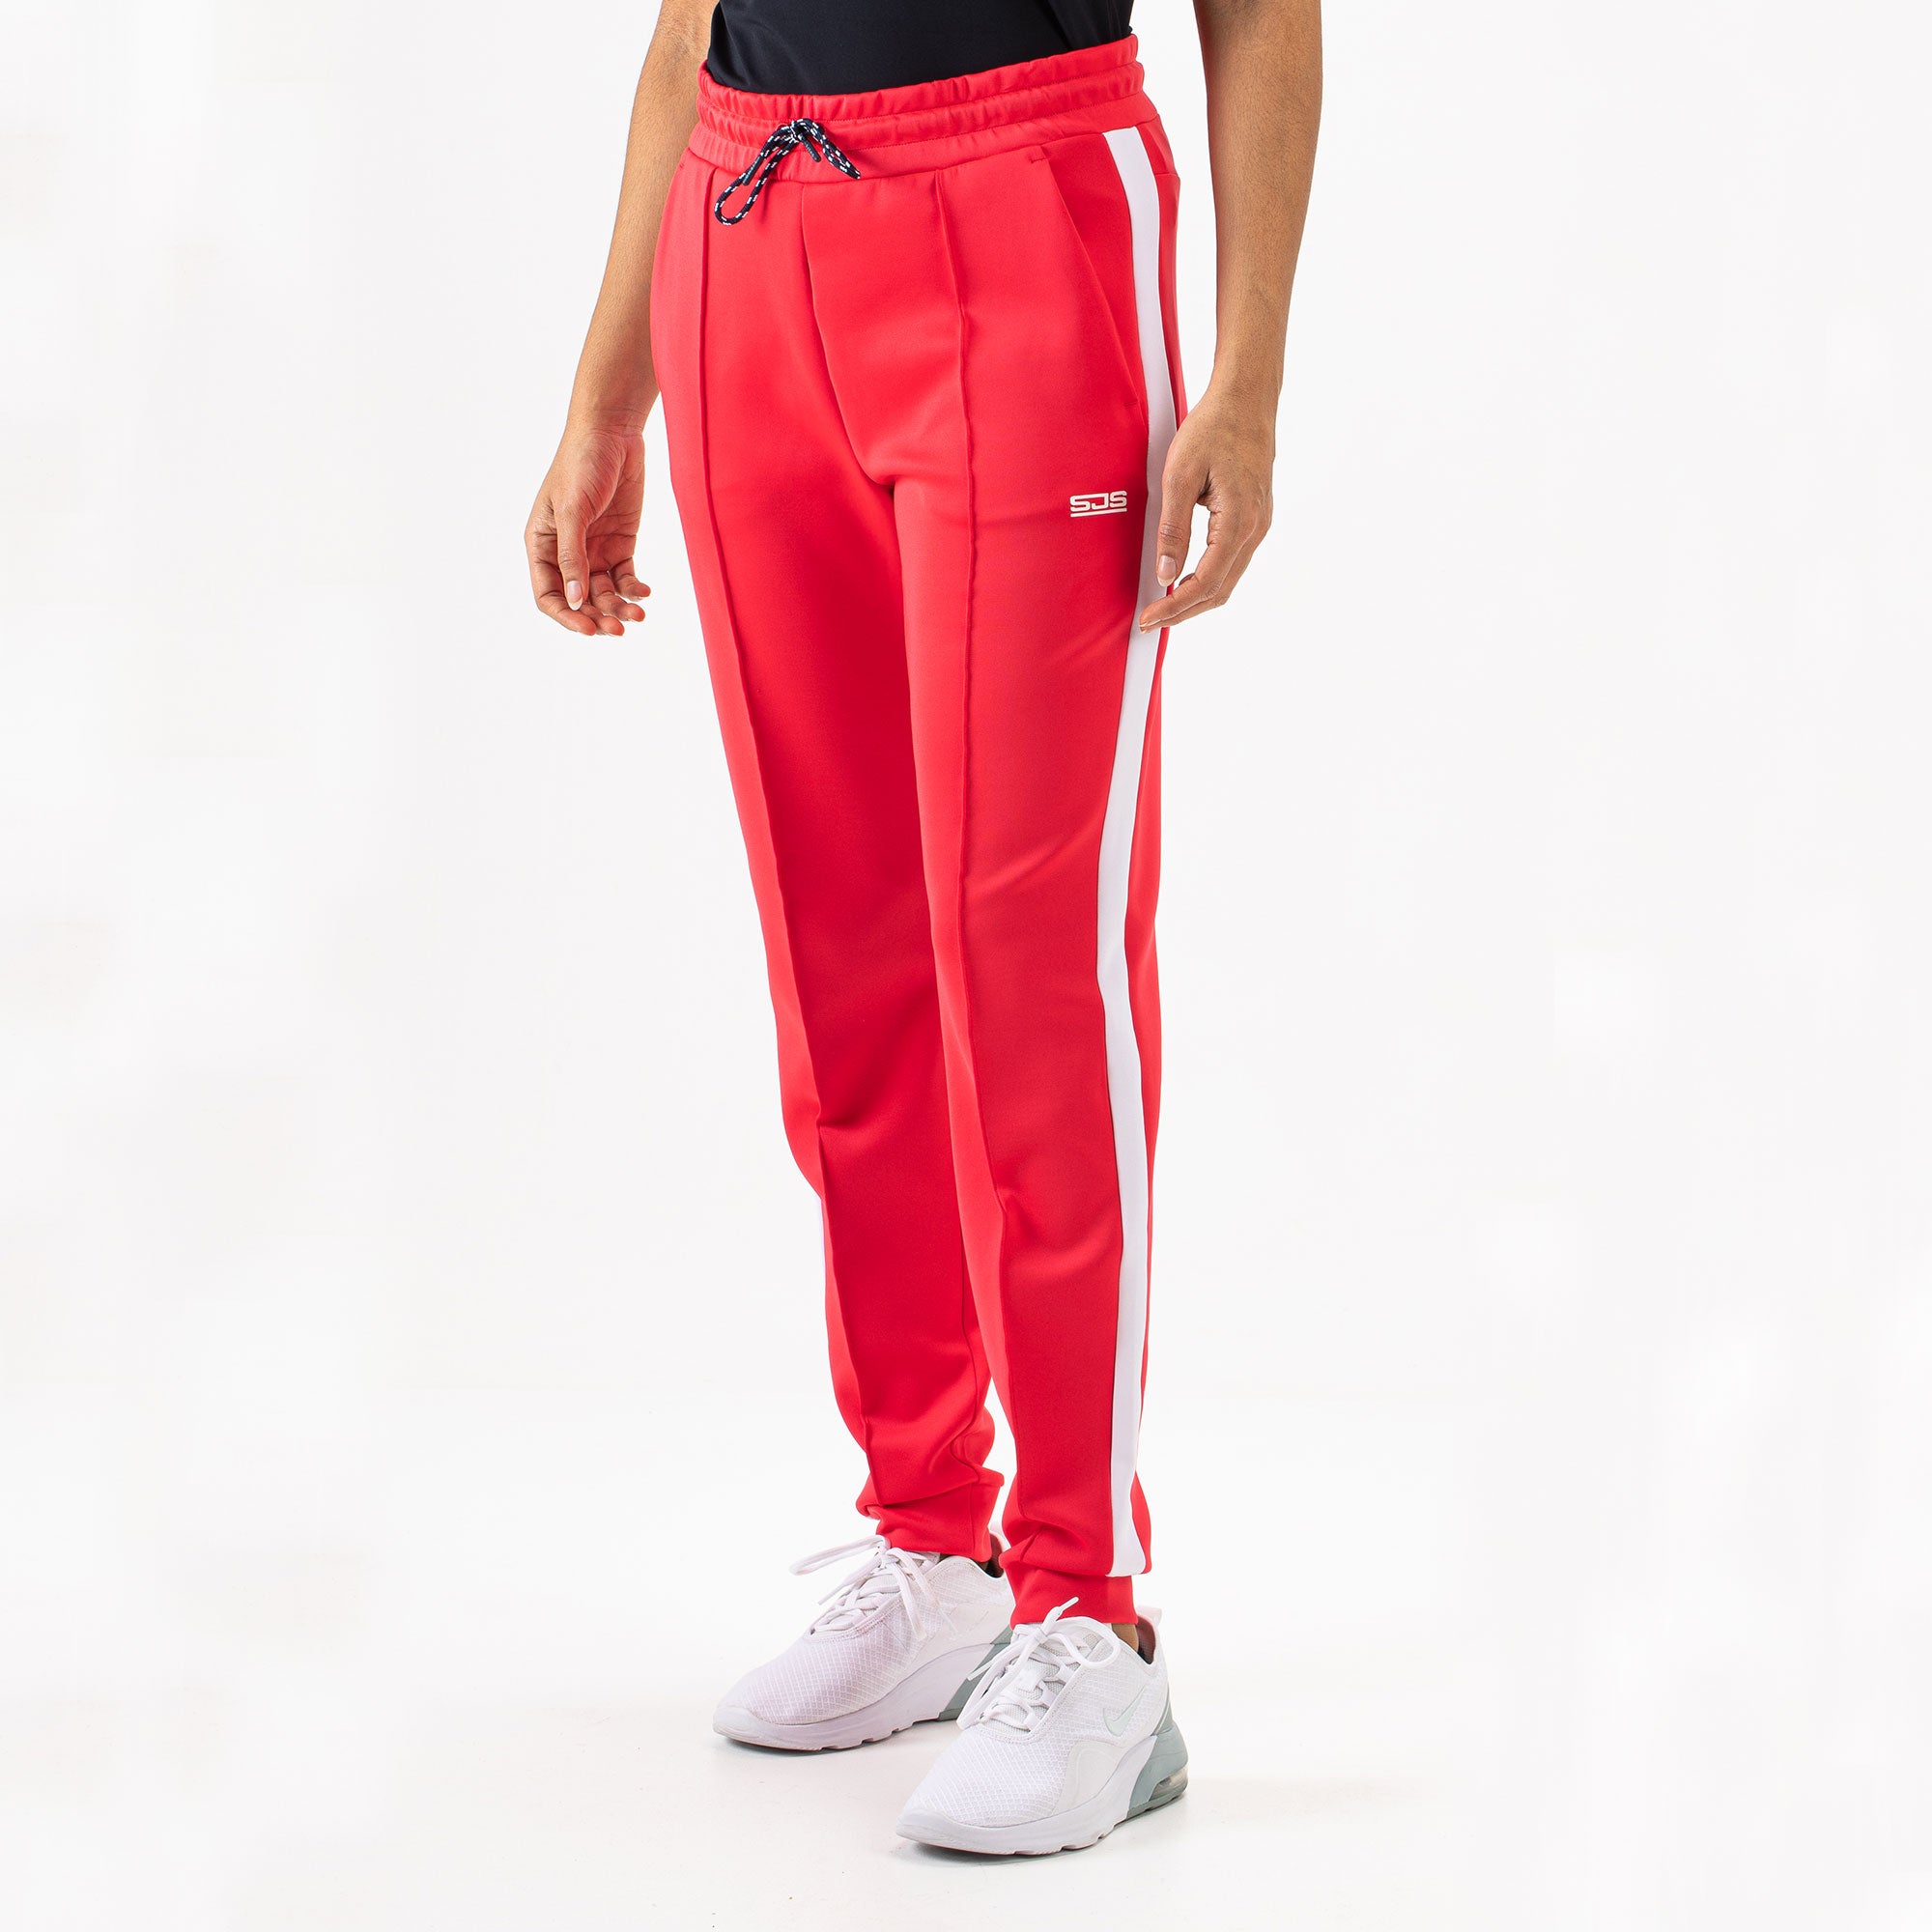 Sjeng Sports Kensi Women's Tennis Pants - Red (1)